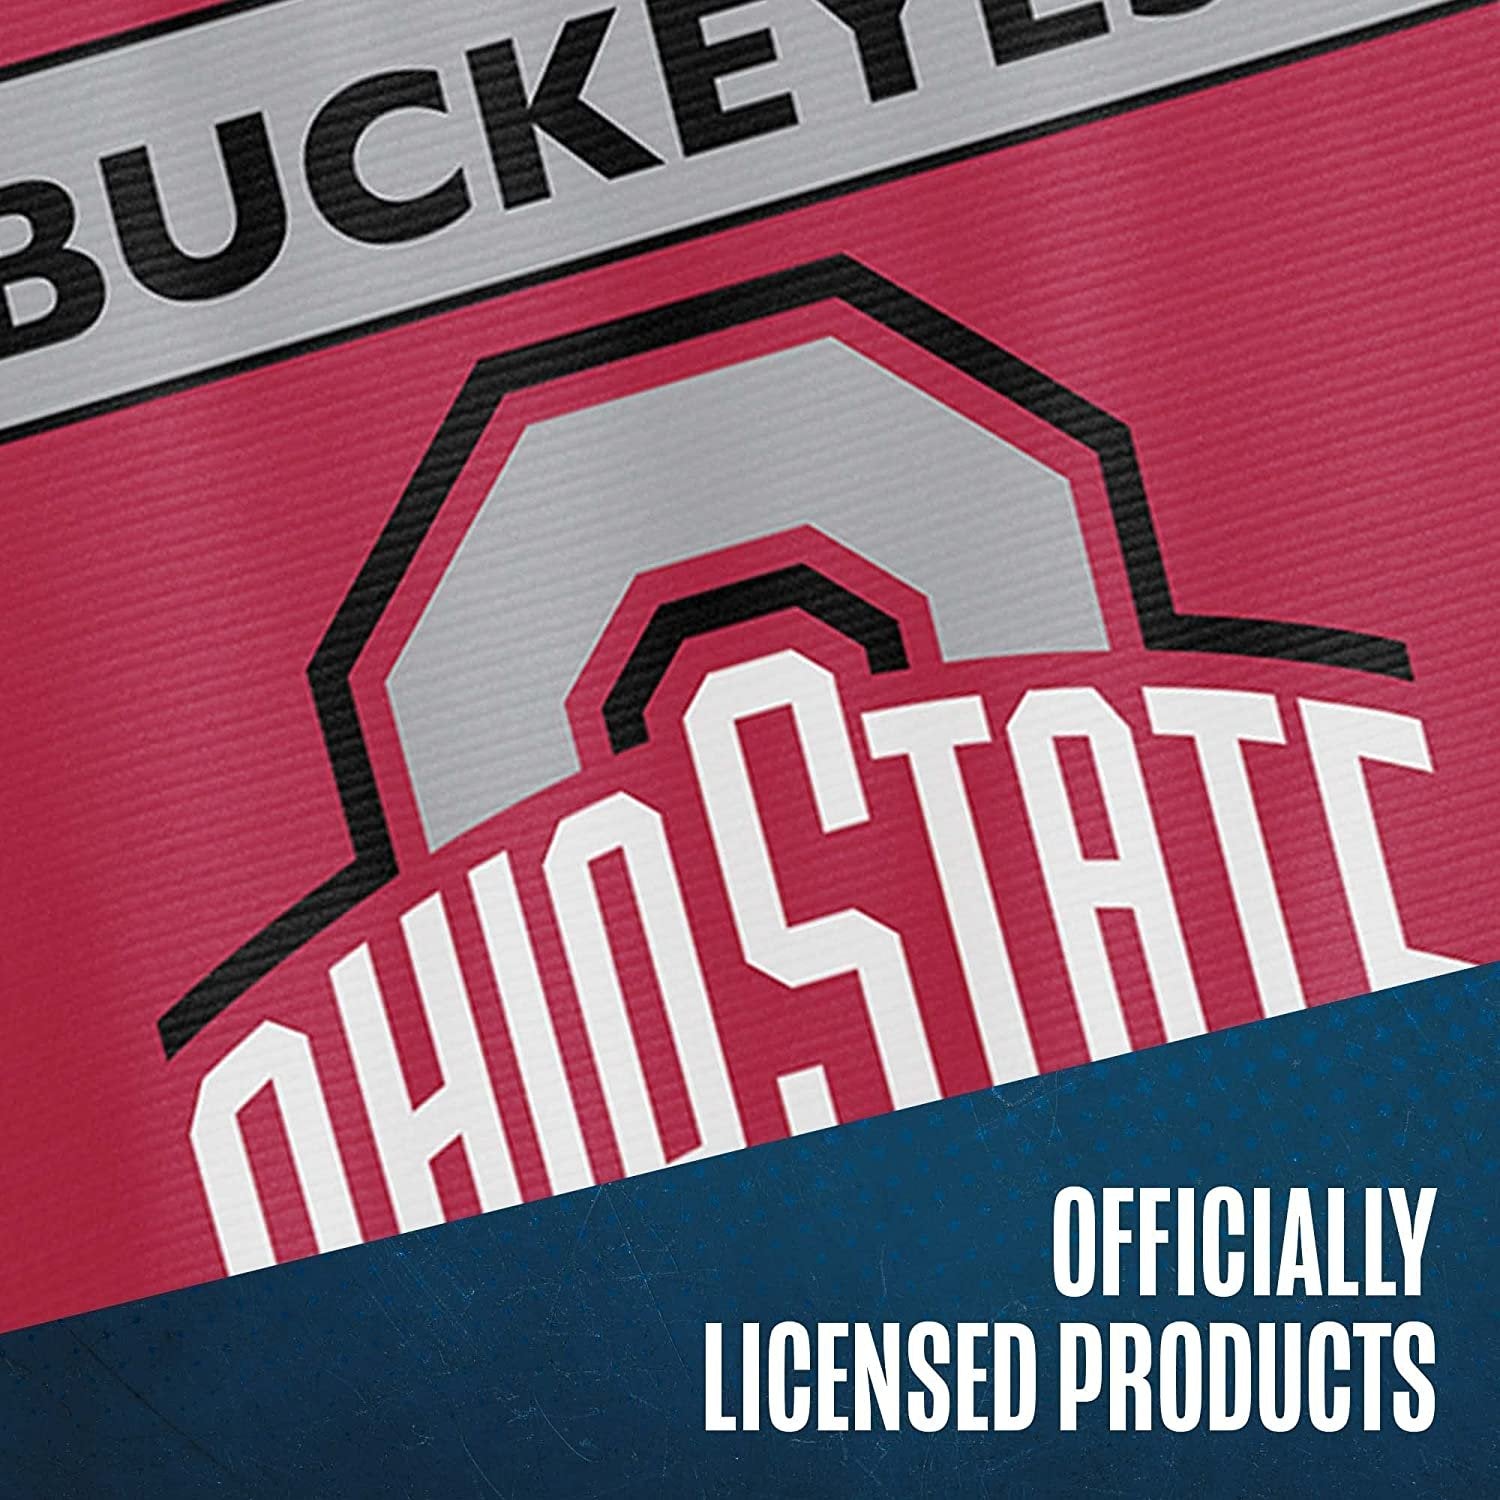 Ohio State Buckeyes University Buckeyes Premium Double Sided Garden Flag Banner 12.5x18 Inch Mascot Version